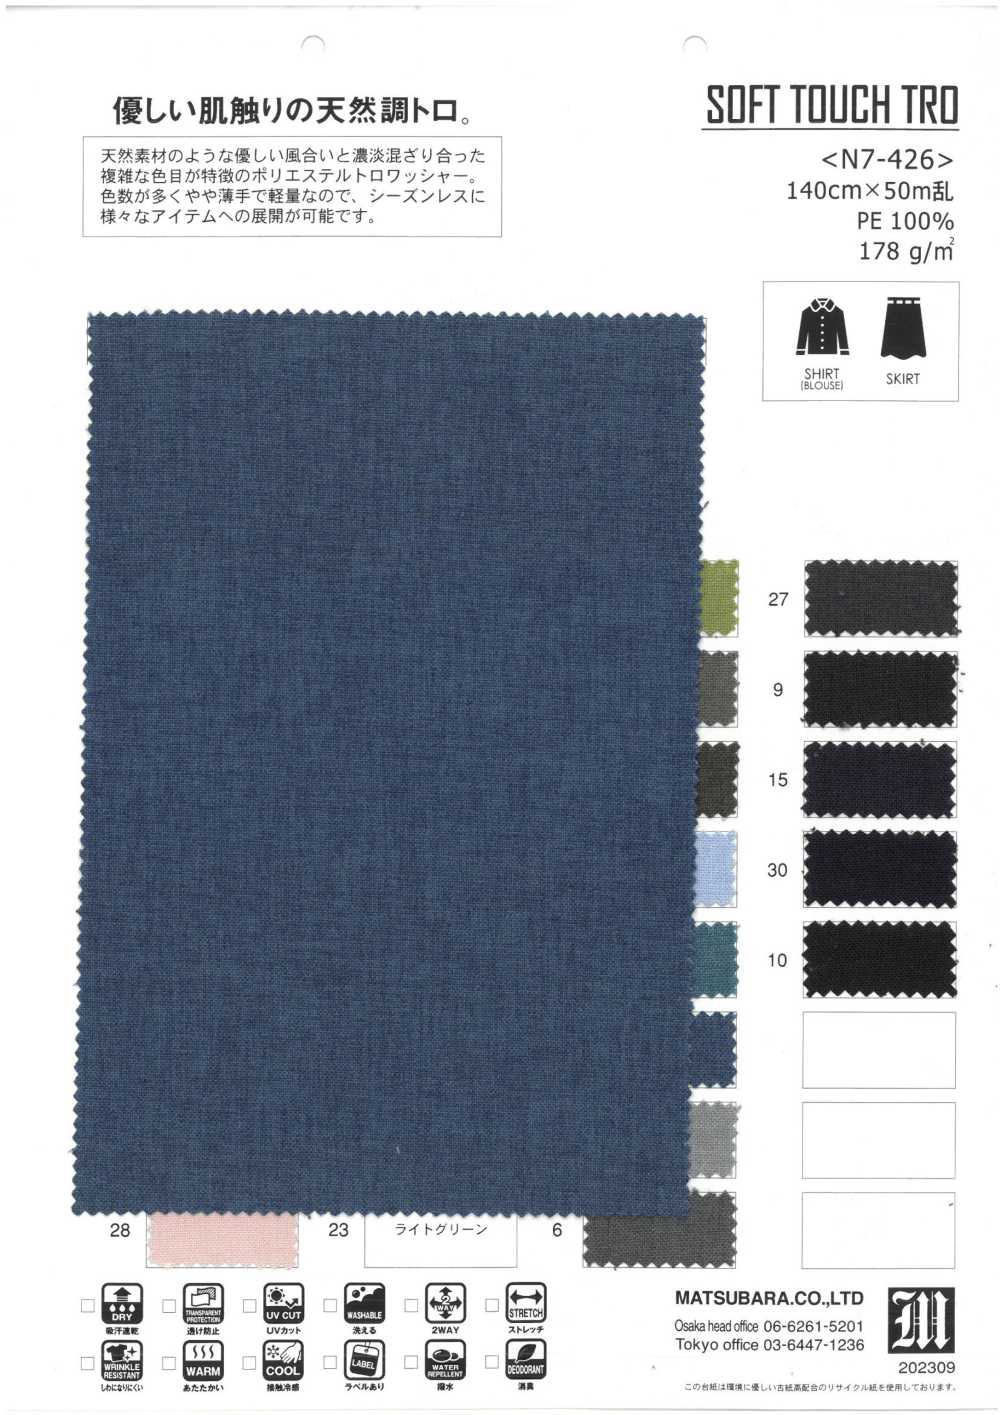 N7-426 SOFY TOUTCH TRO[Fabrication De Textile] Matsubara